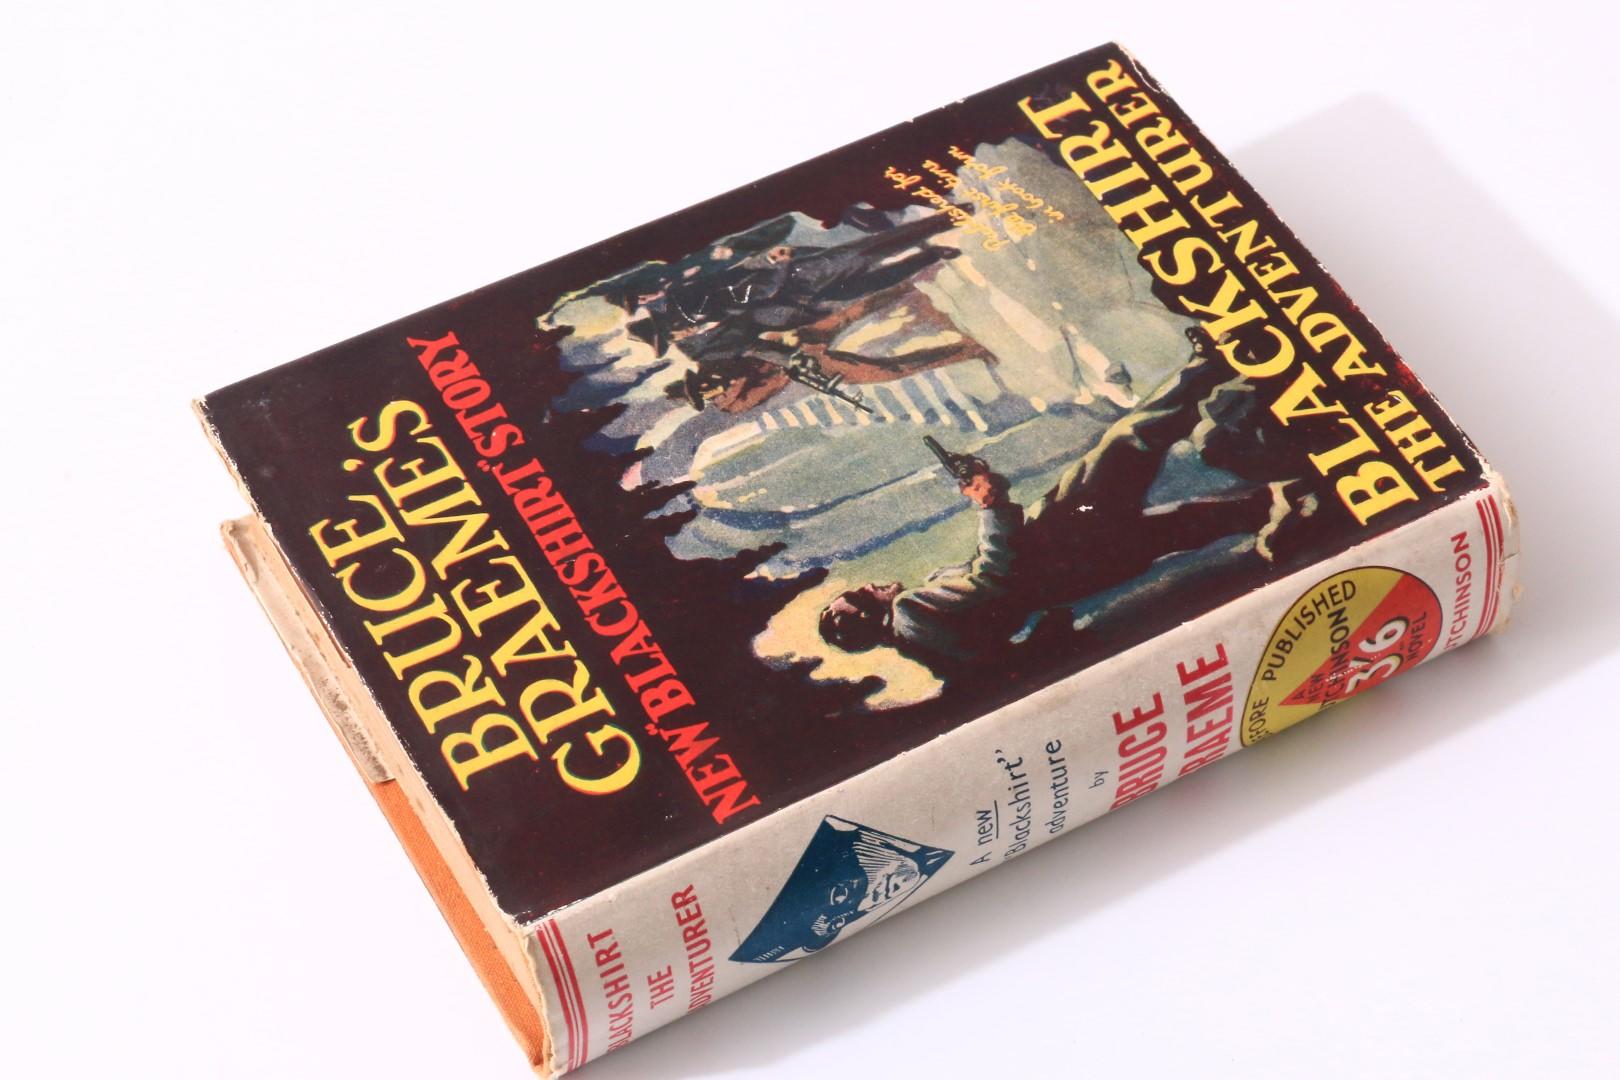 Bruce Graeme - Blackshirt the Adventurer - Hutchinson, nd [1936], First Edition.